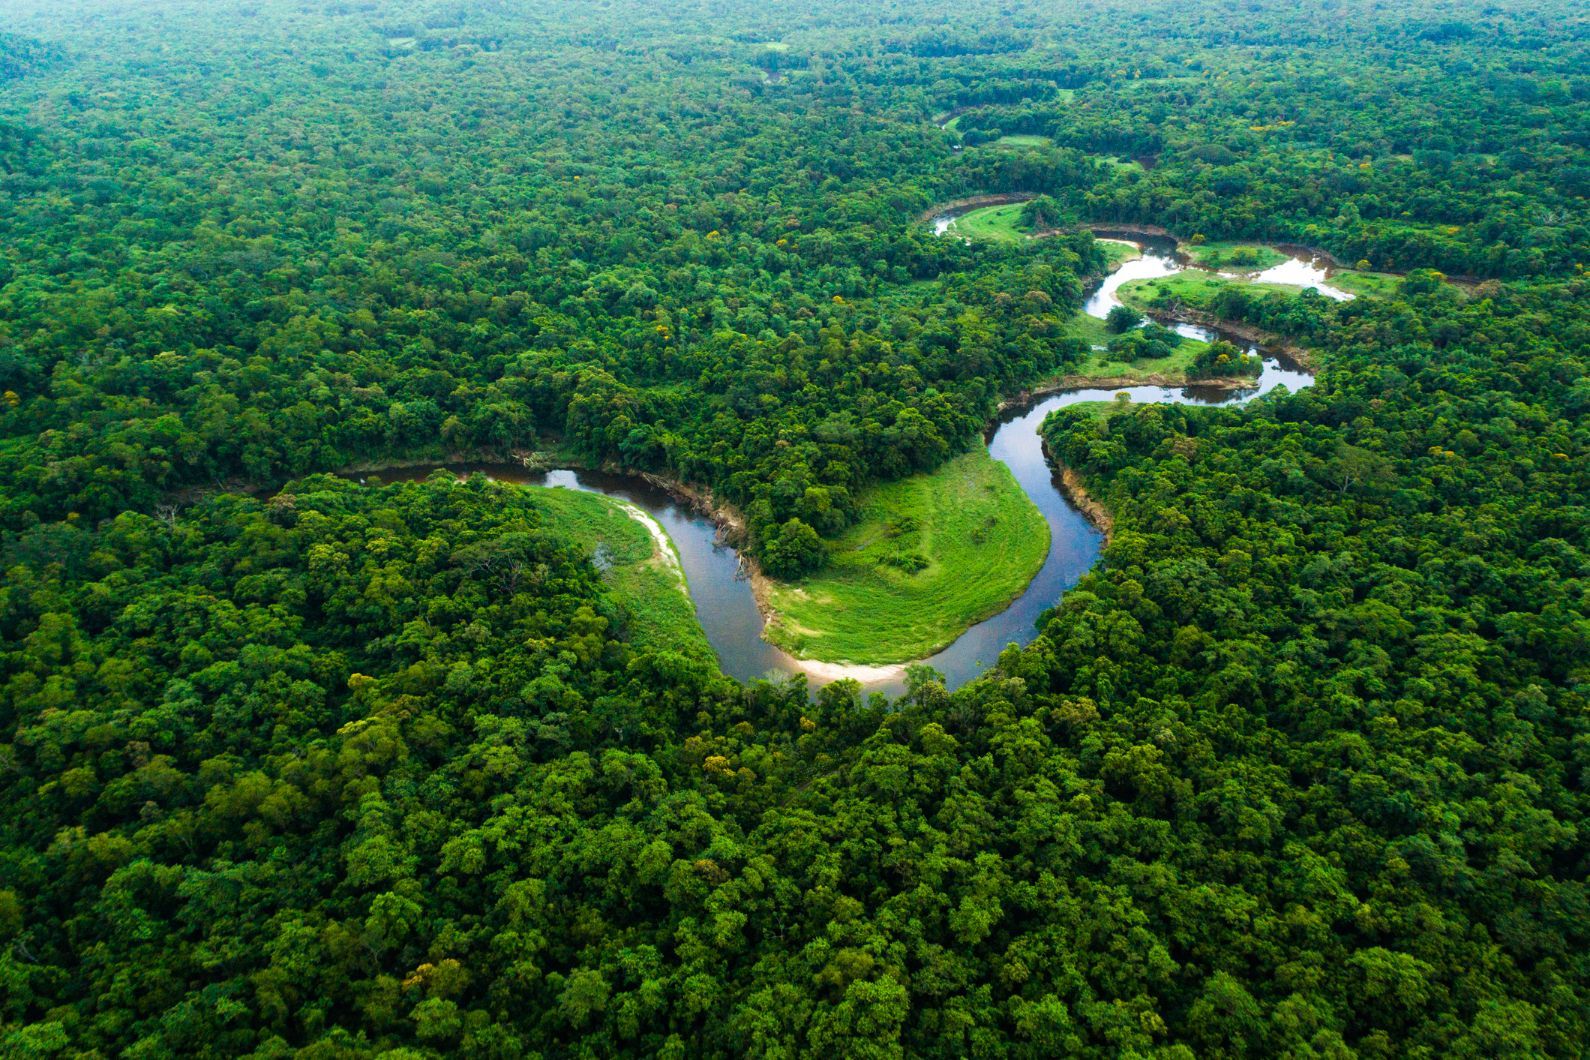 The Amazon river winds through dense rainforest